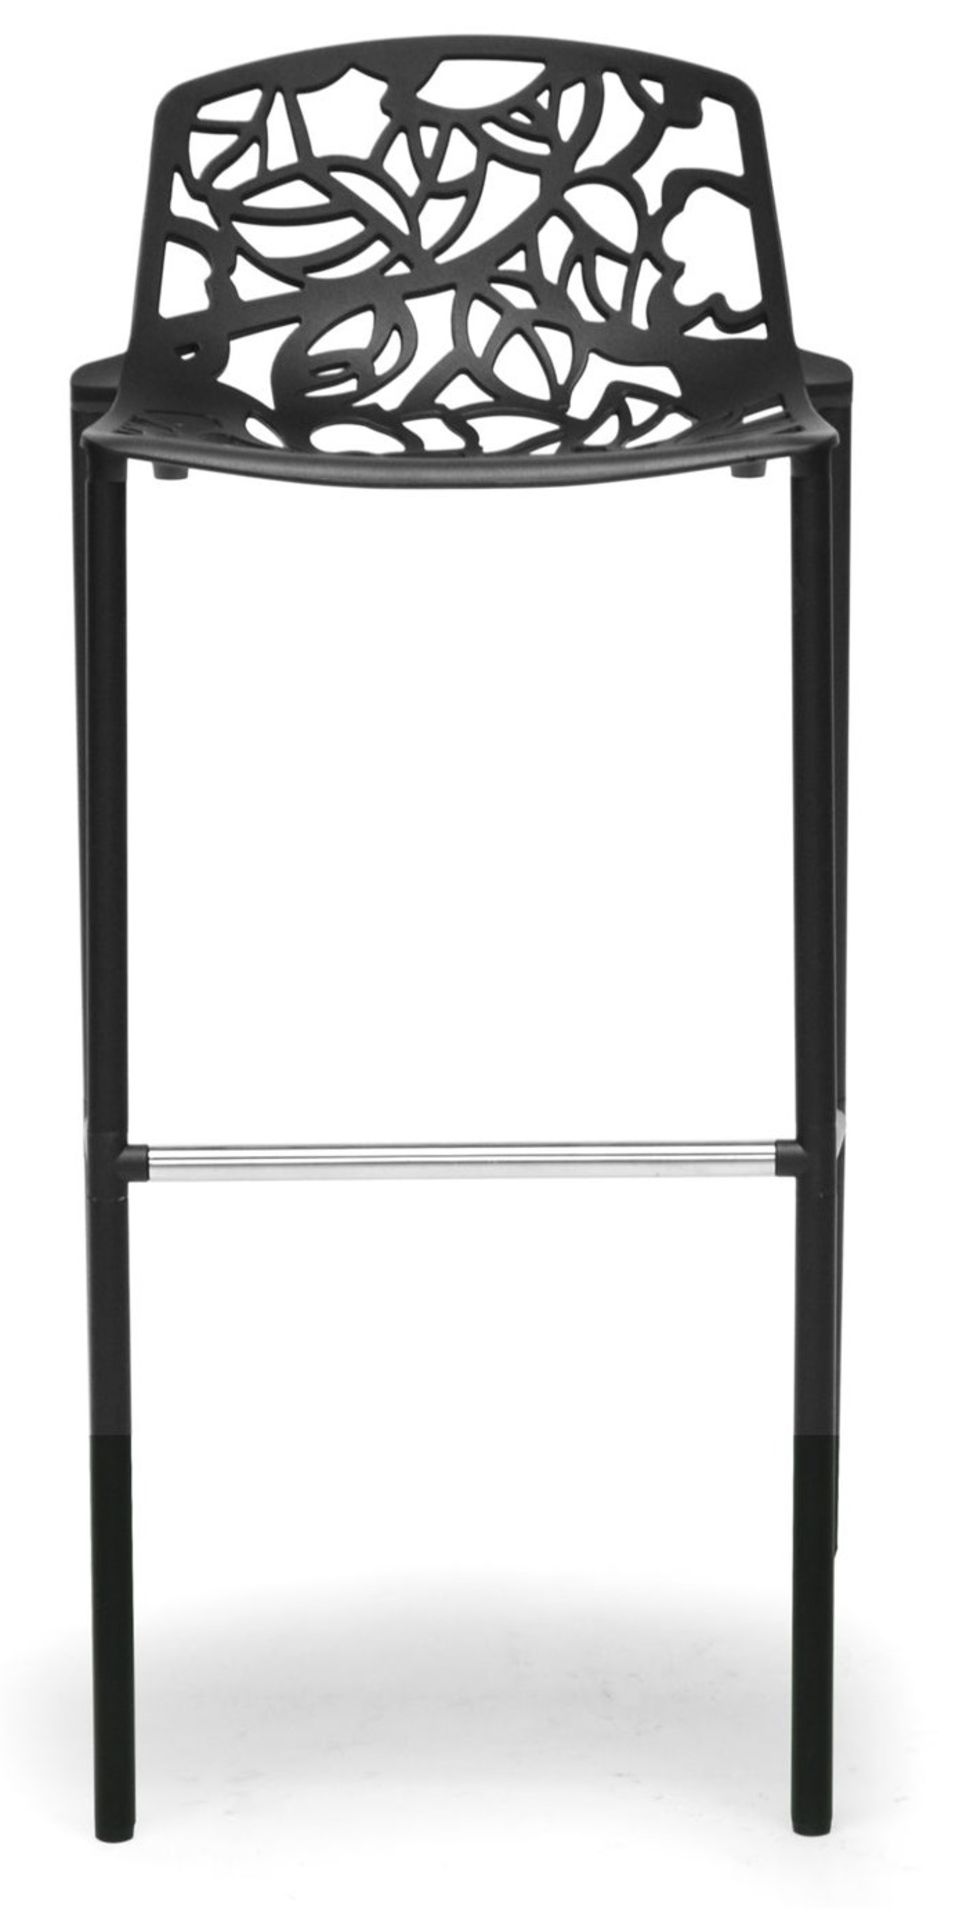 1 x Metal Modern Designer Bar Stool With A Floral Filigree Design - Original RRP £166.00 - Brand New - Image 3 of 3